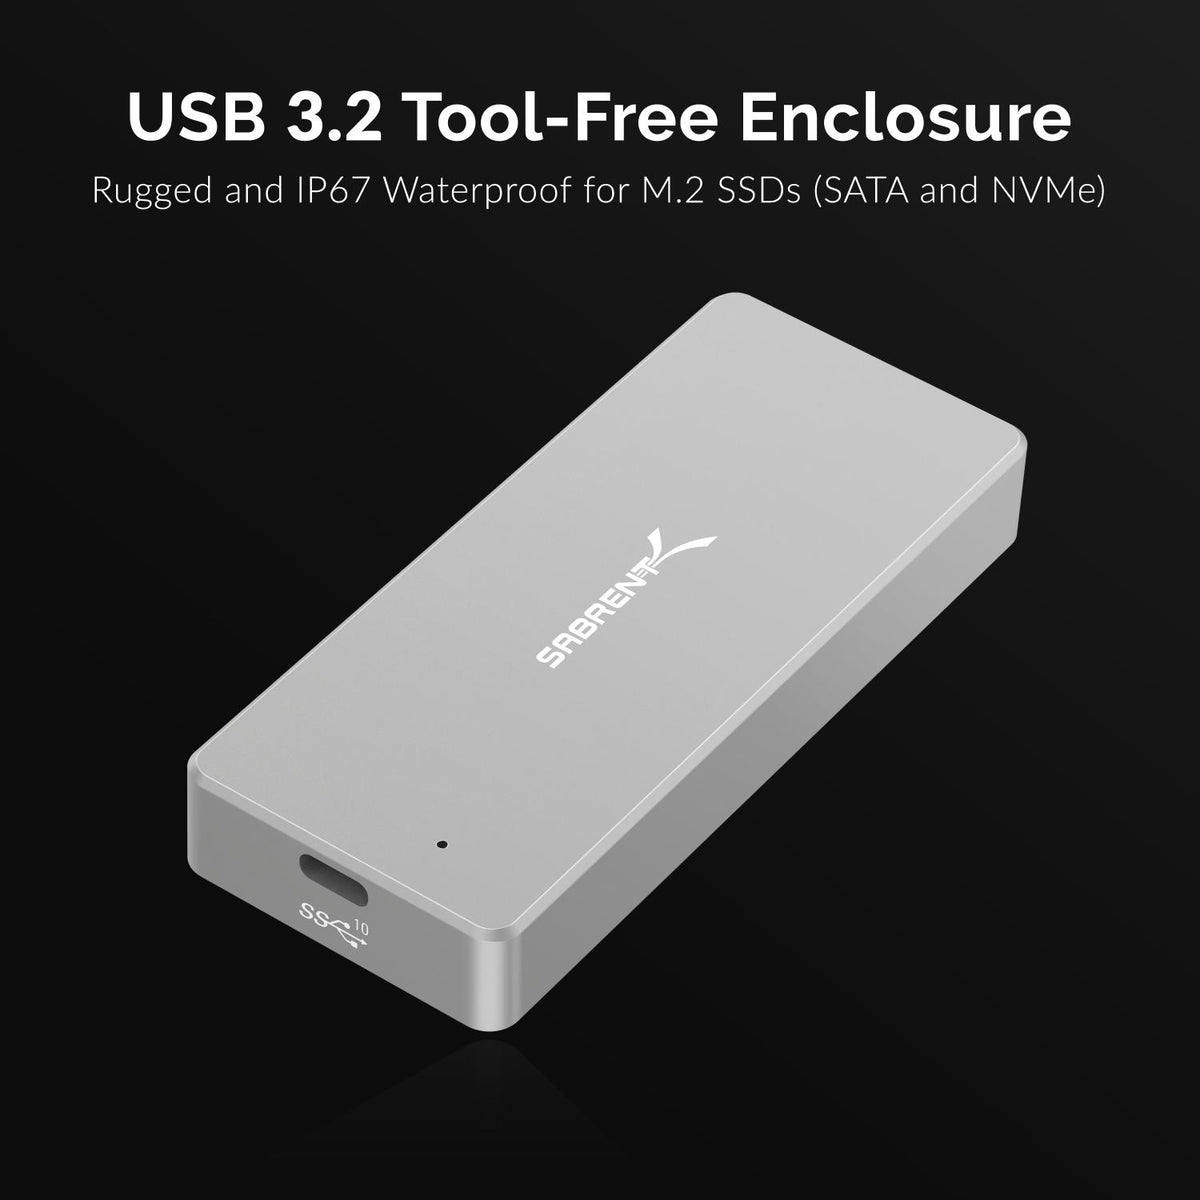 USB 3.2 IP67 Water Resistant Tool-Free SSD Enclosure